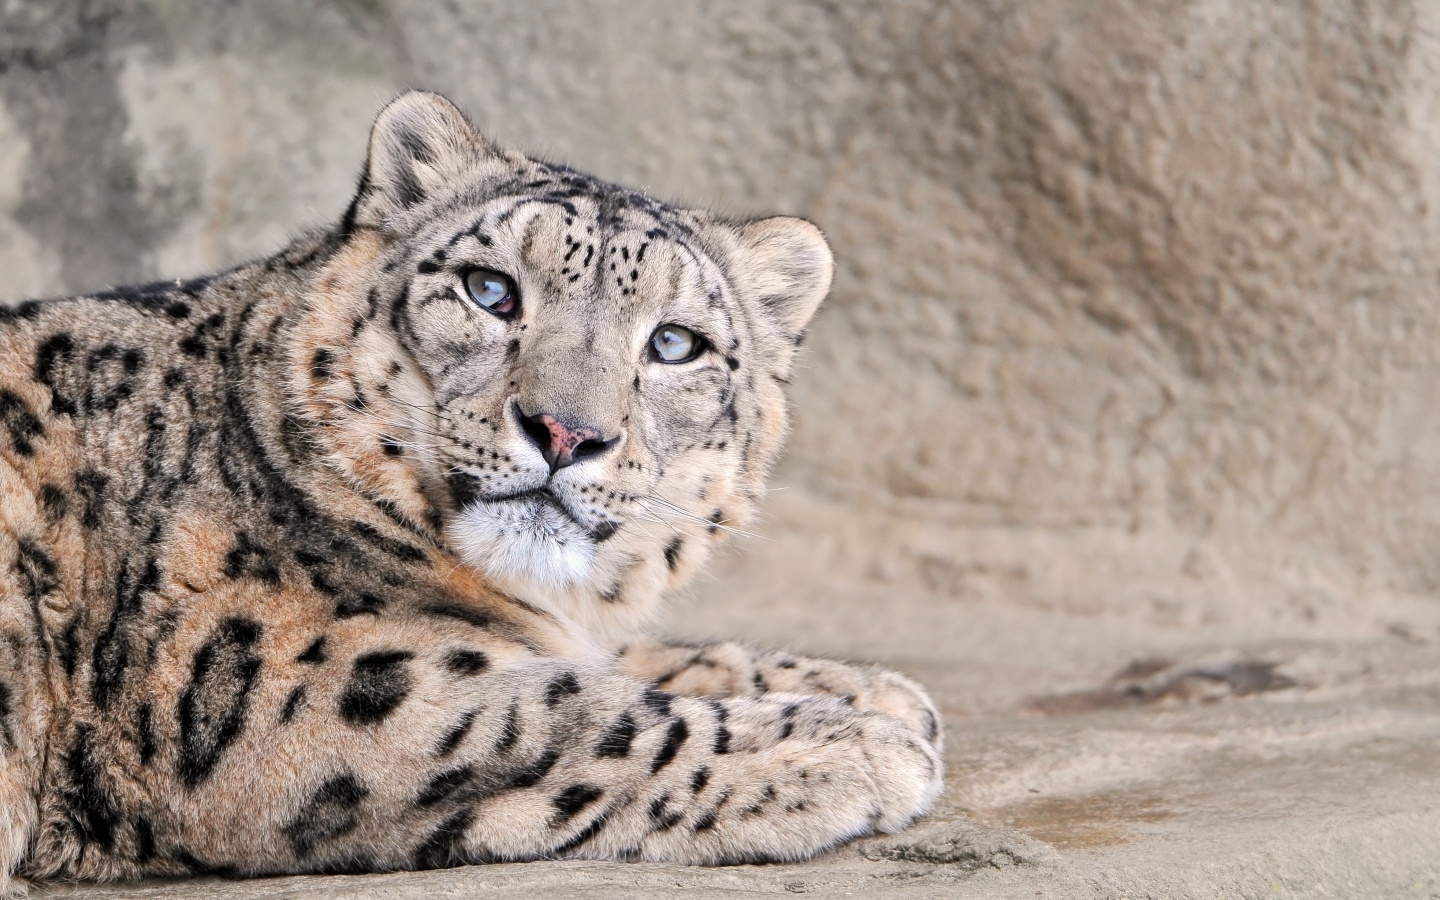 animals, leopards Smartphone Background